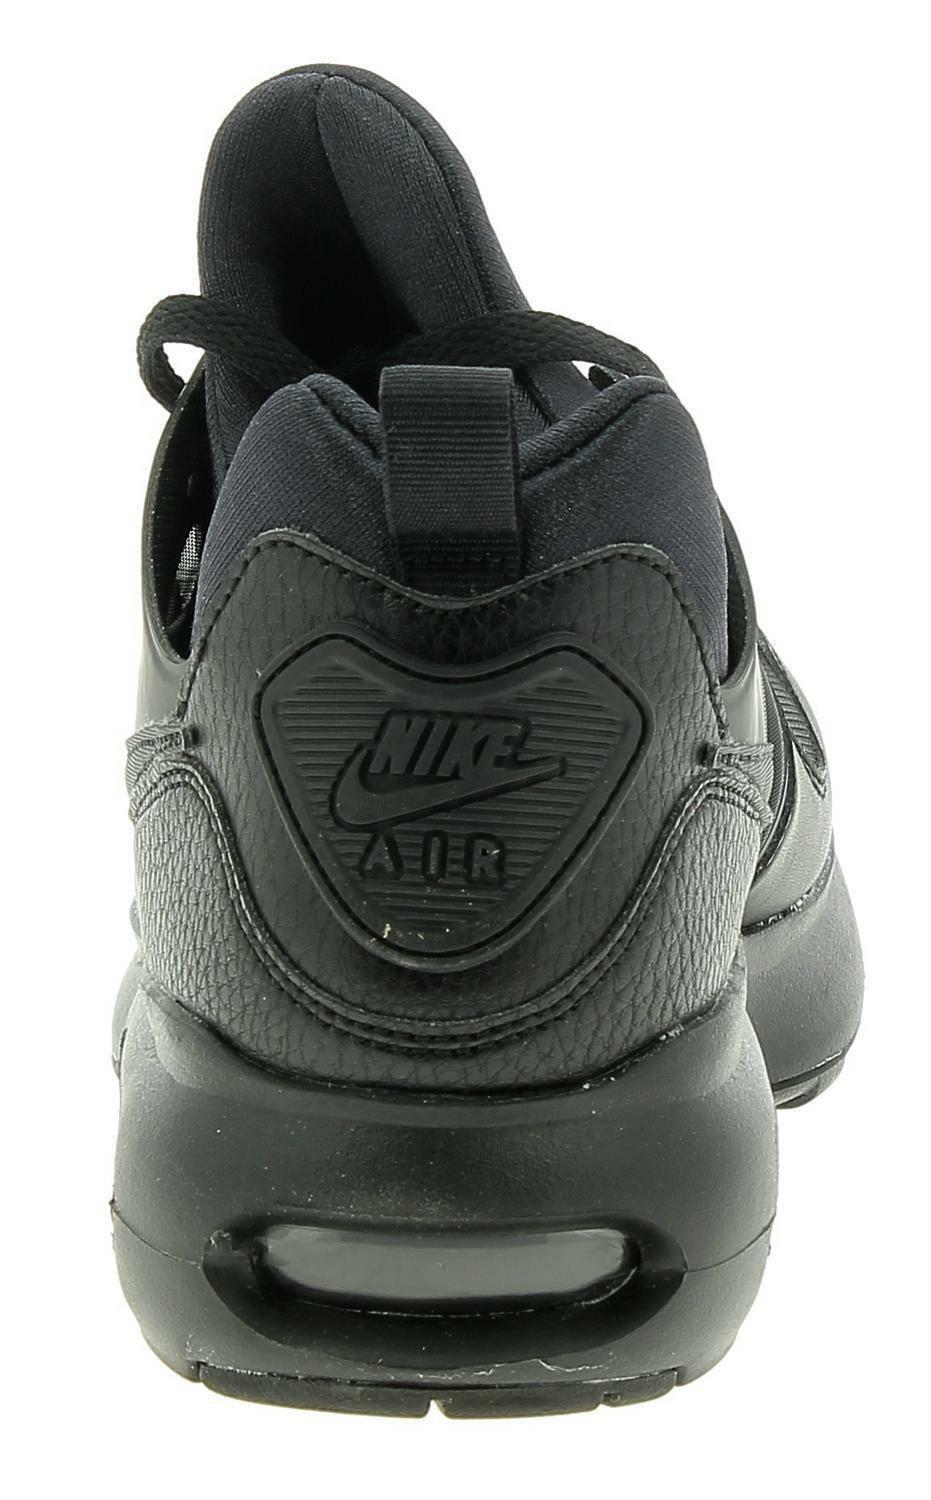 Nike air max prime scarpe uomo nere 876068006